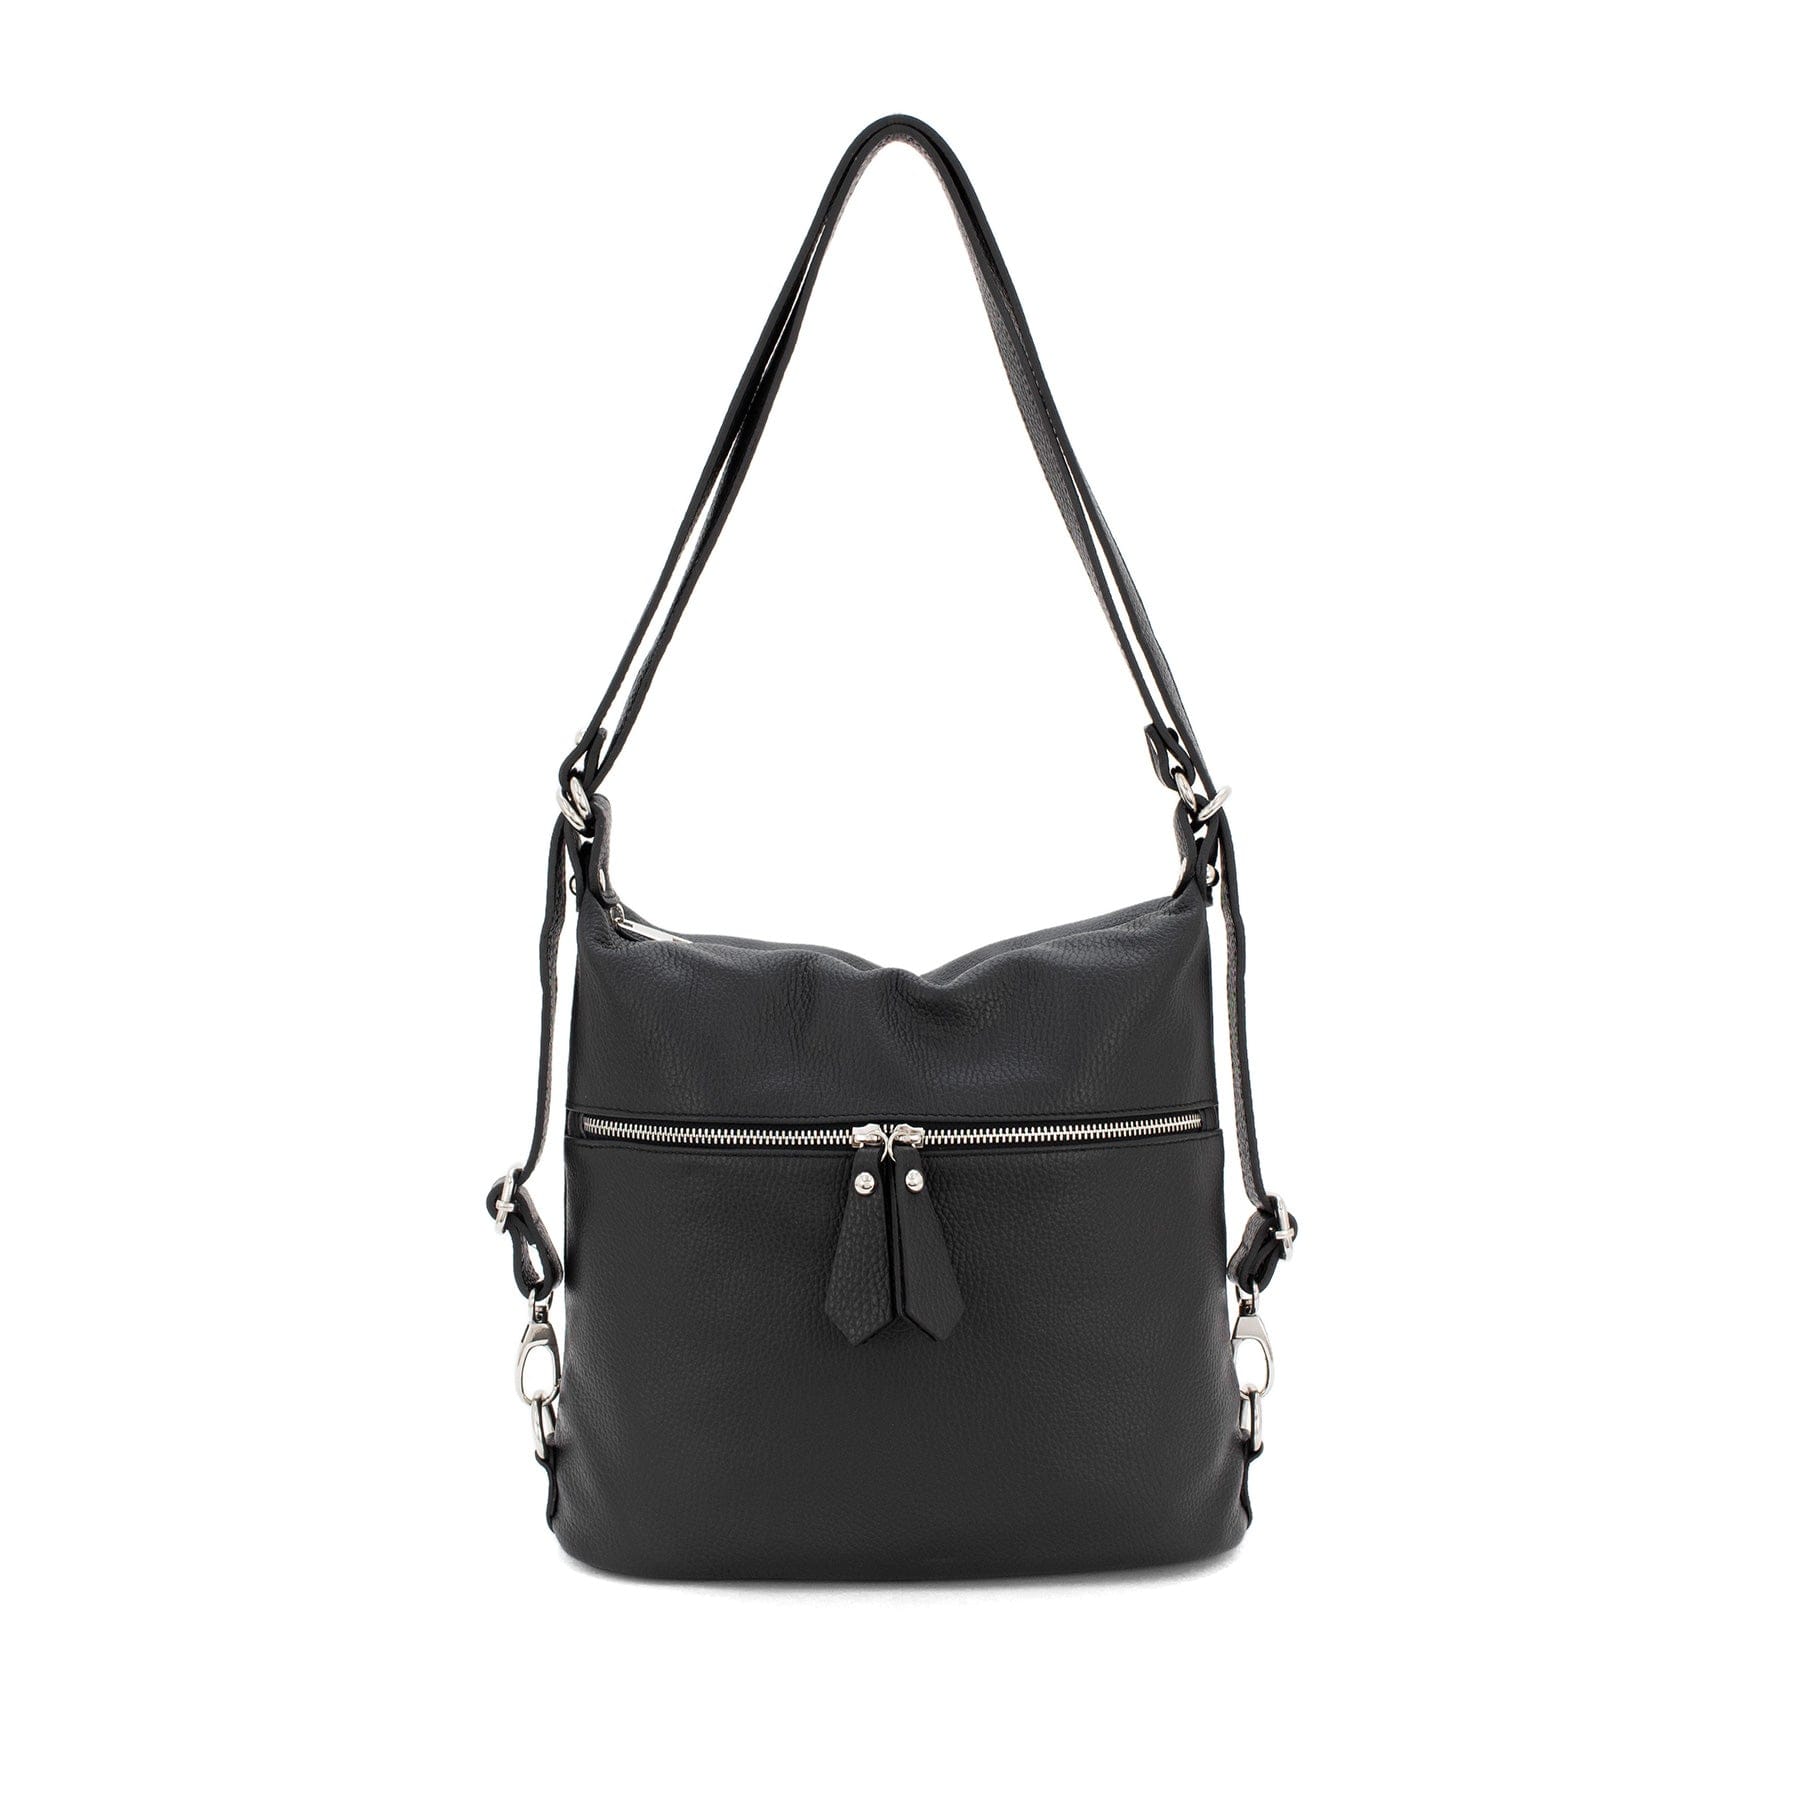 lusciousscarves Handbags Black Italian Leather Convertible Bag Handbag / Rucksack / Backpack